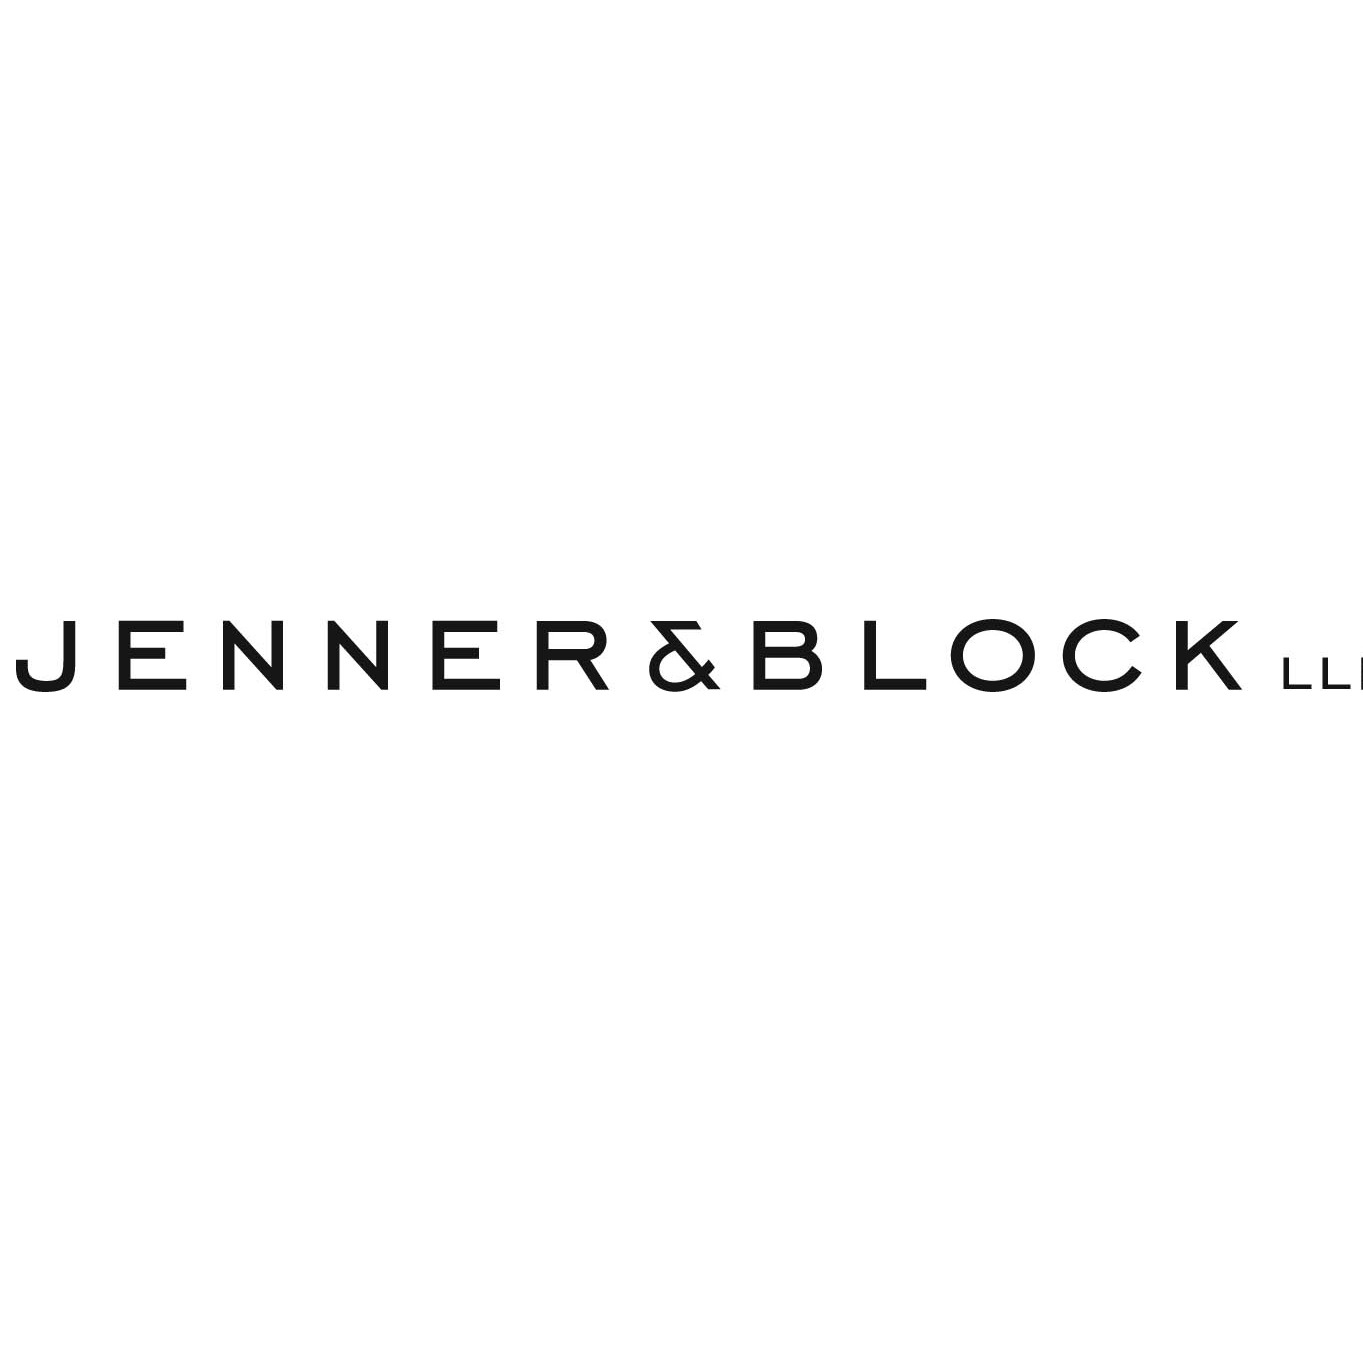 the Jenner & Block logo.